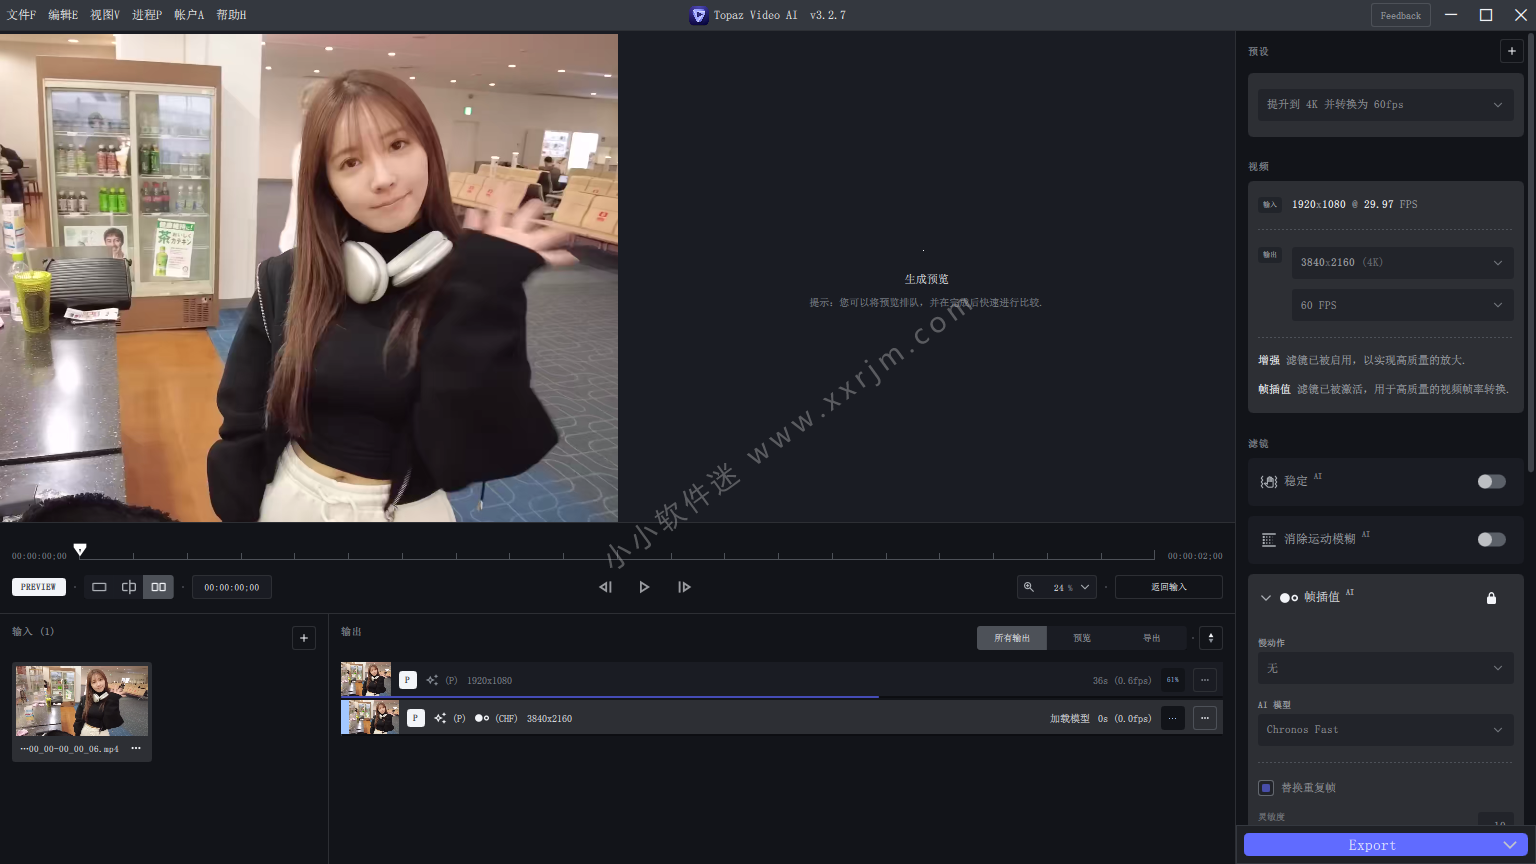 Topaz Video AI 3.2.7 免安装中文汉化便携版-黄玉视频AI软件